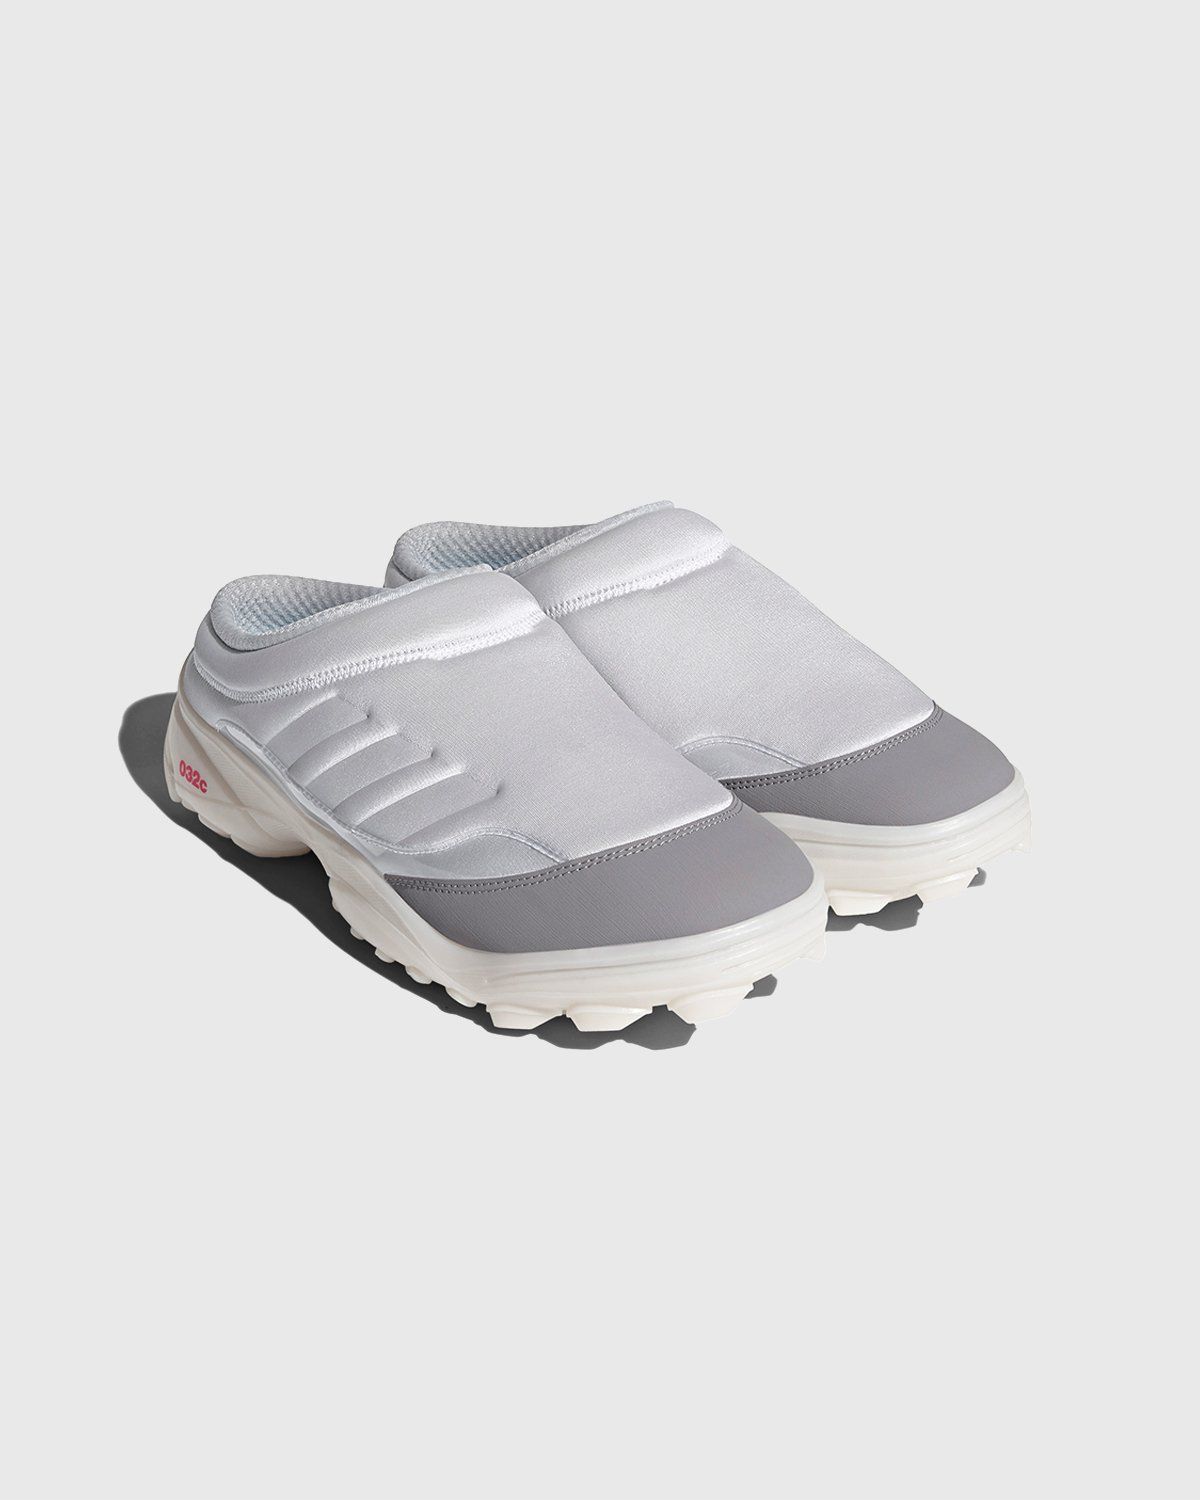 Adidas x 032c – GSG Mule Greone - Mules - White - Image 3